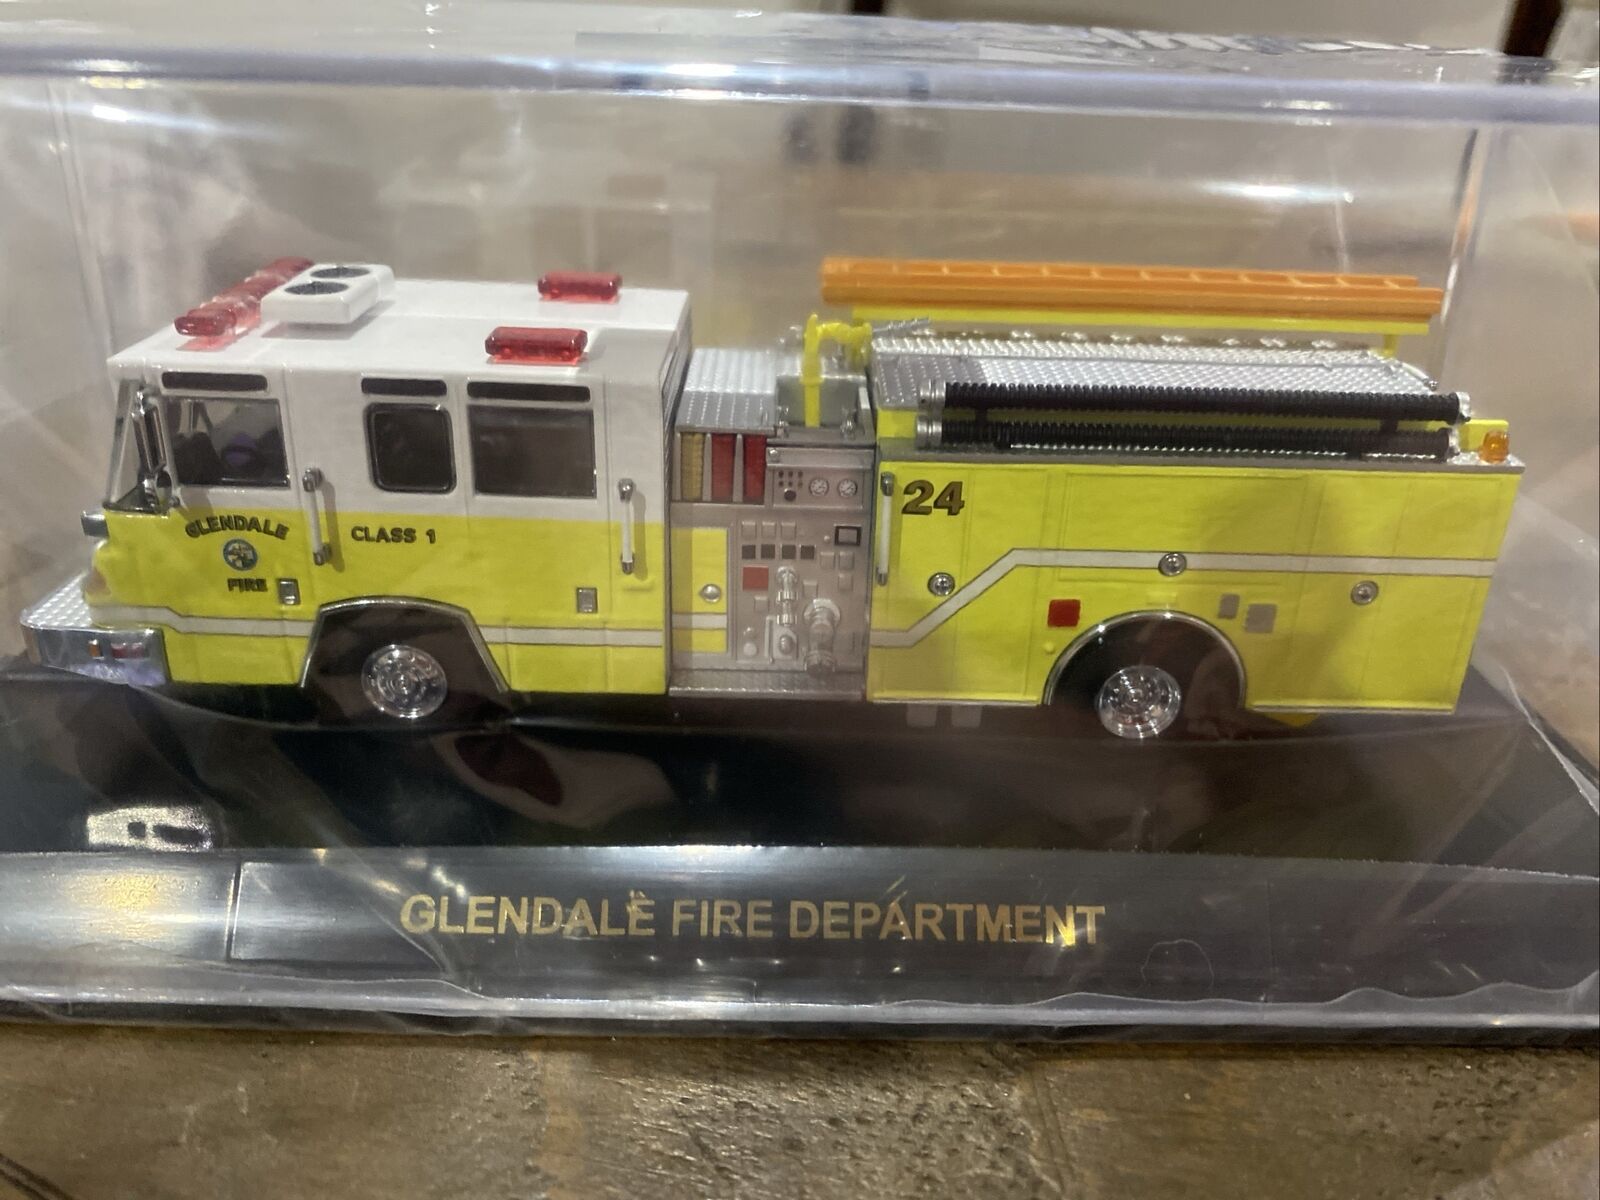 Code 3 Glendale Fire Department Pierce Quantum Engine 24